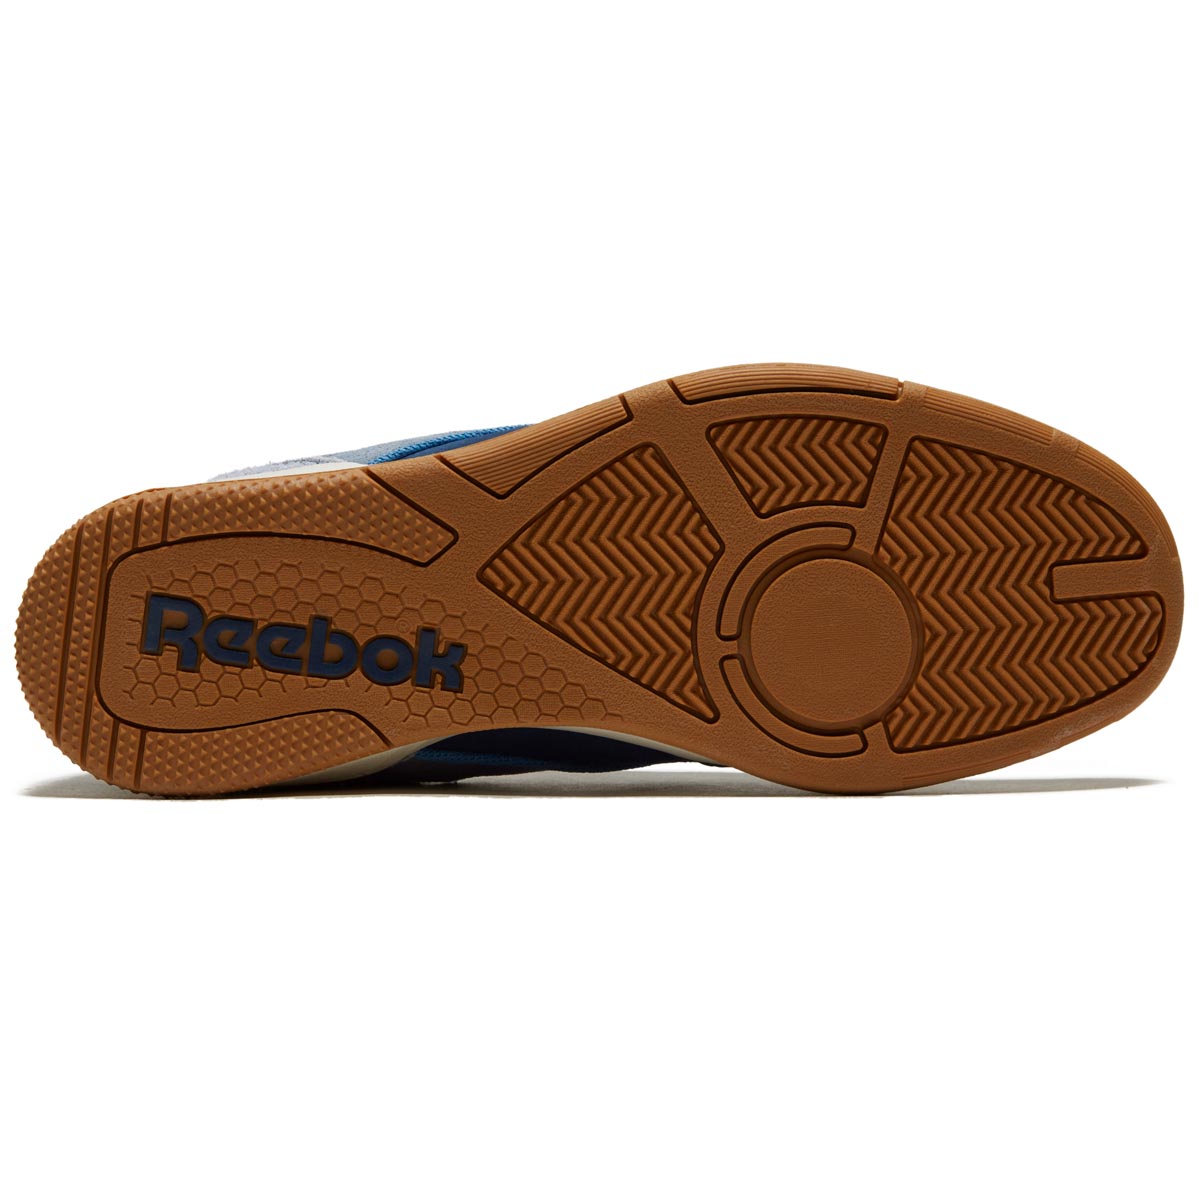 Reebok Bb 4000 Ii Shoes - Battle Blue/Blue Slate/Grey image 4